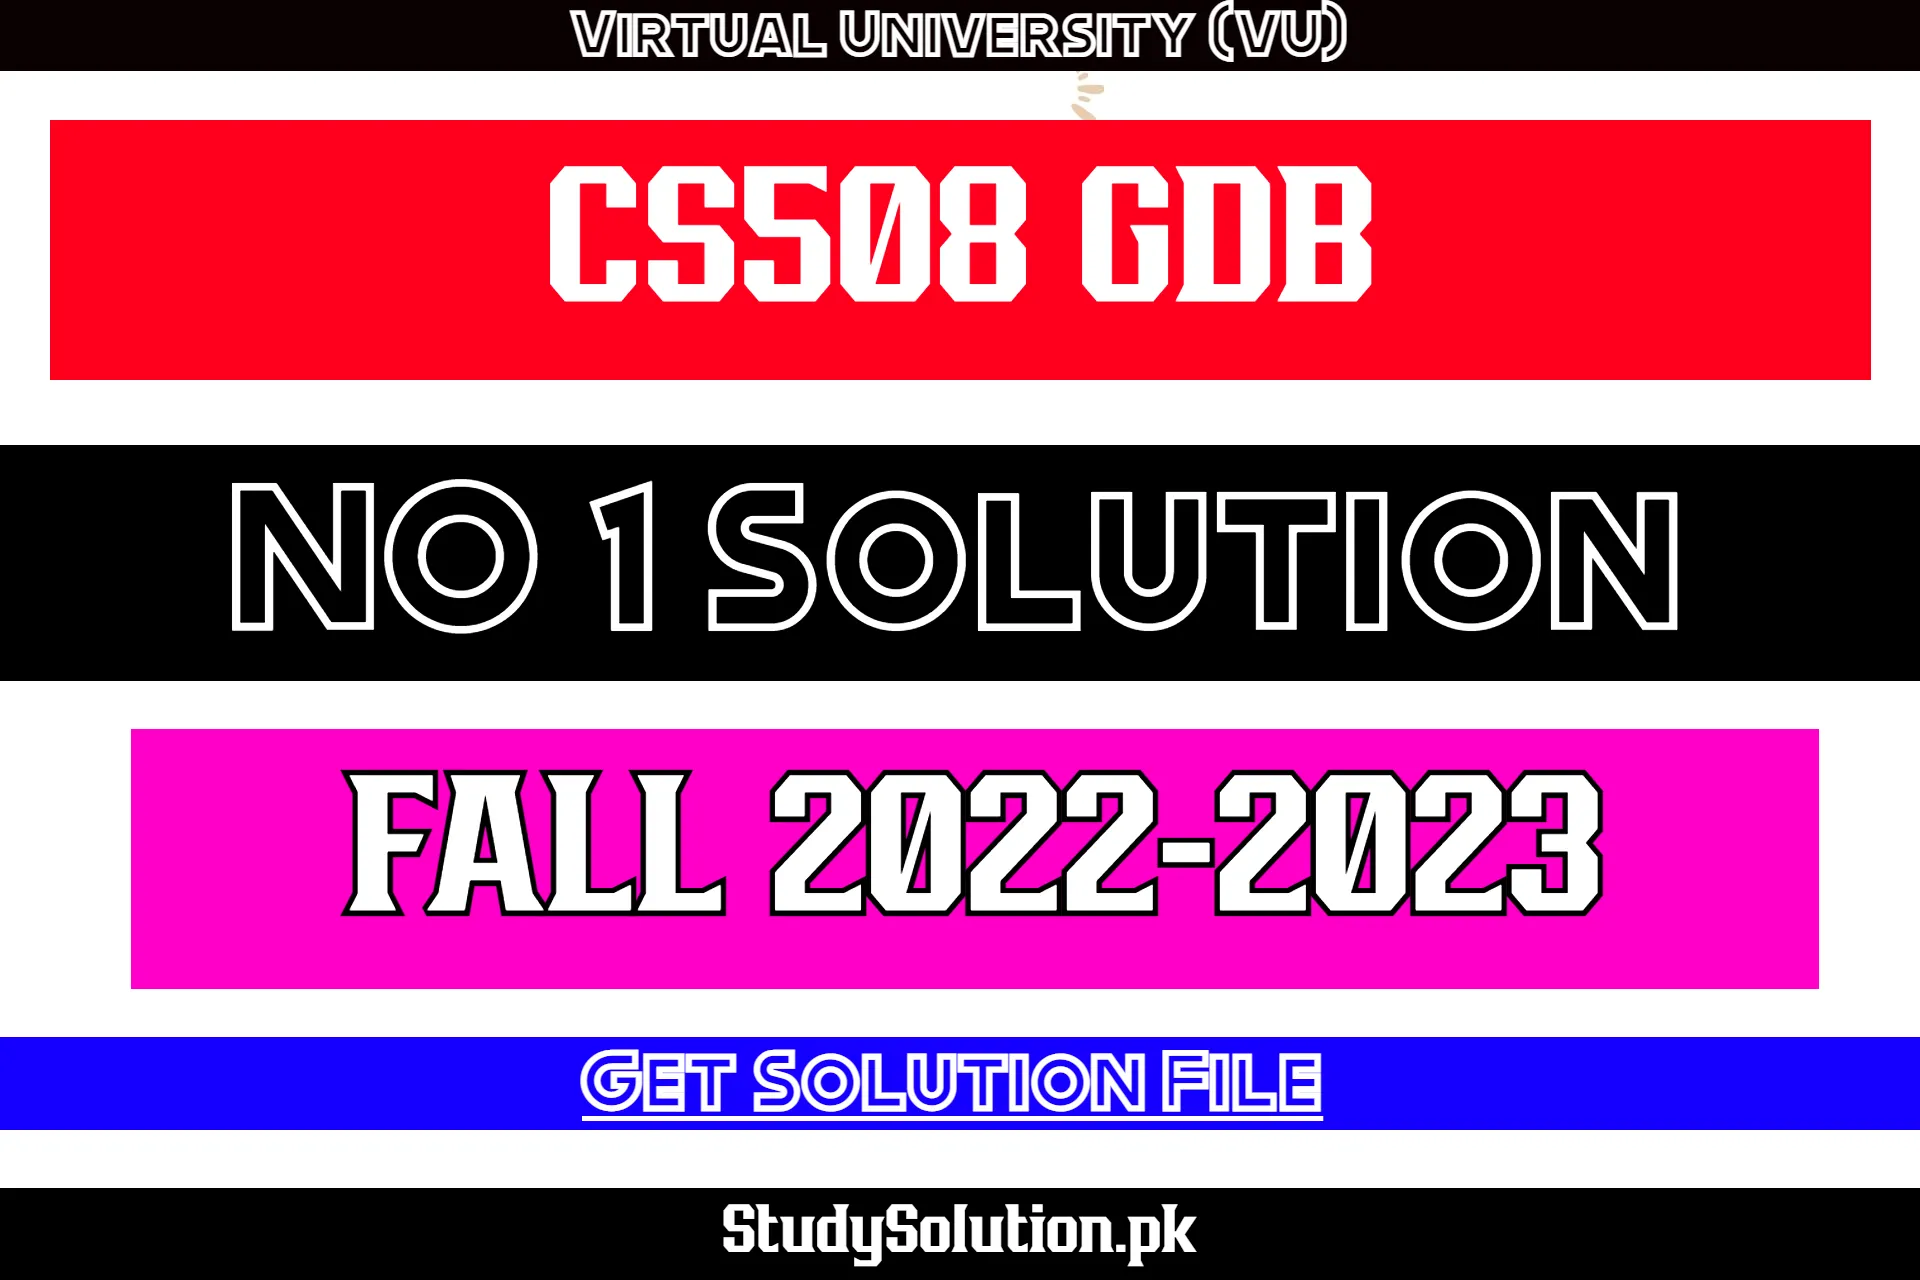 CS508 GDB No 1 Solution Fall 2022